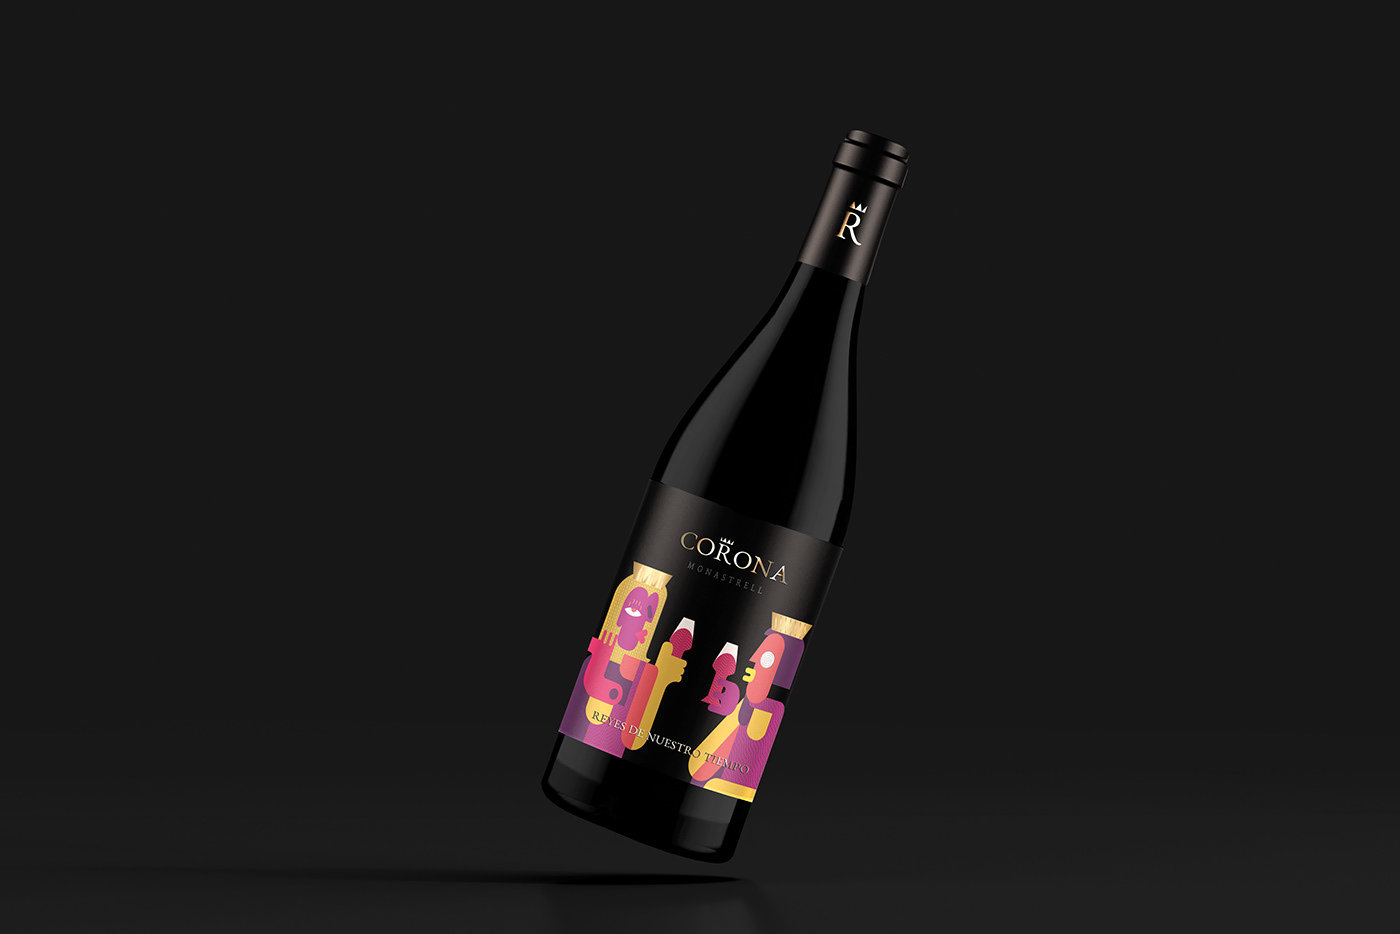 Vinos vinotinto packaging design Packaging product design 